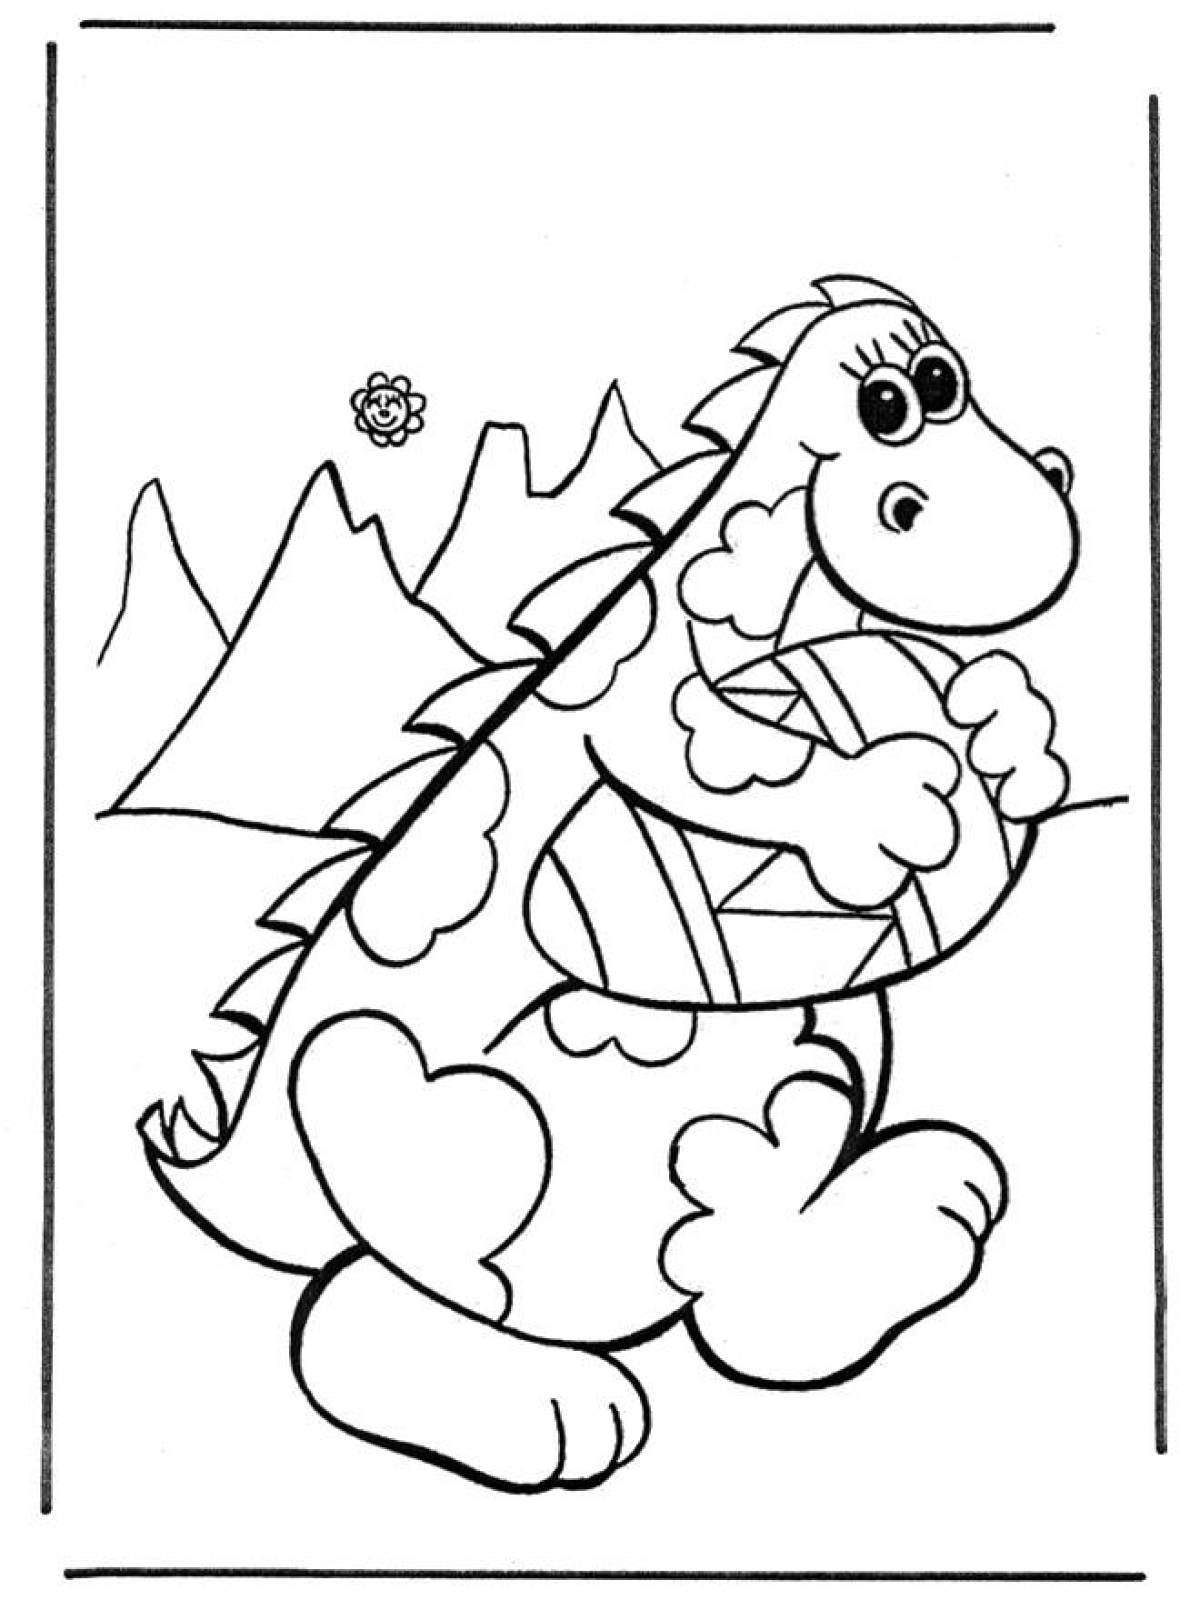 Playful dinosaur team coloring page